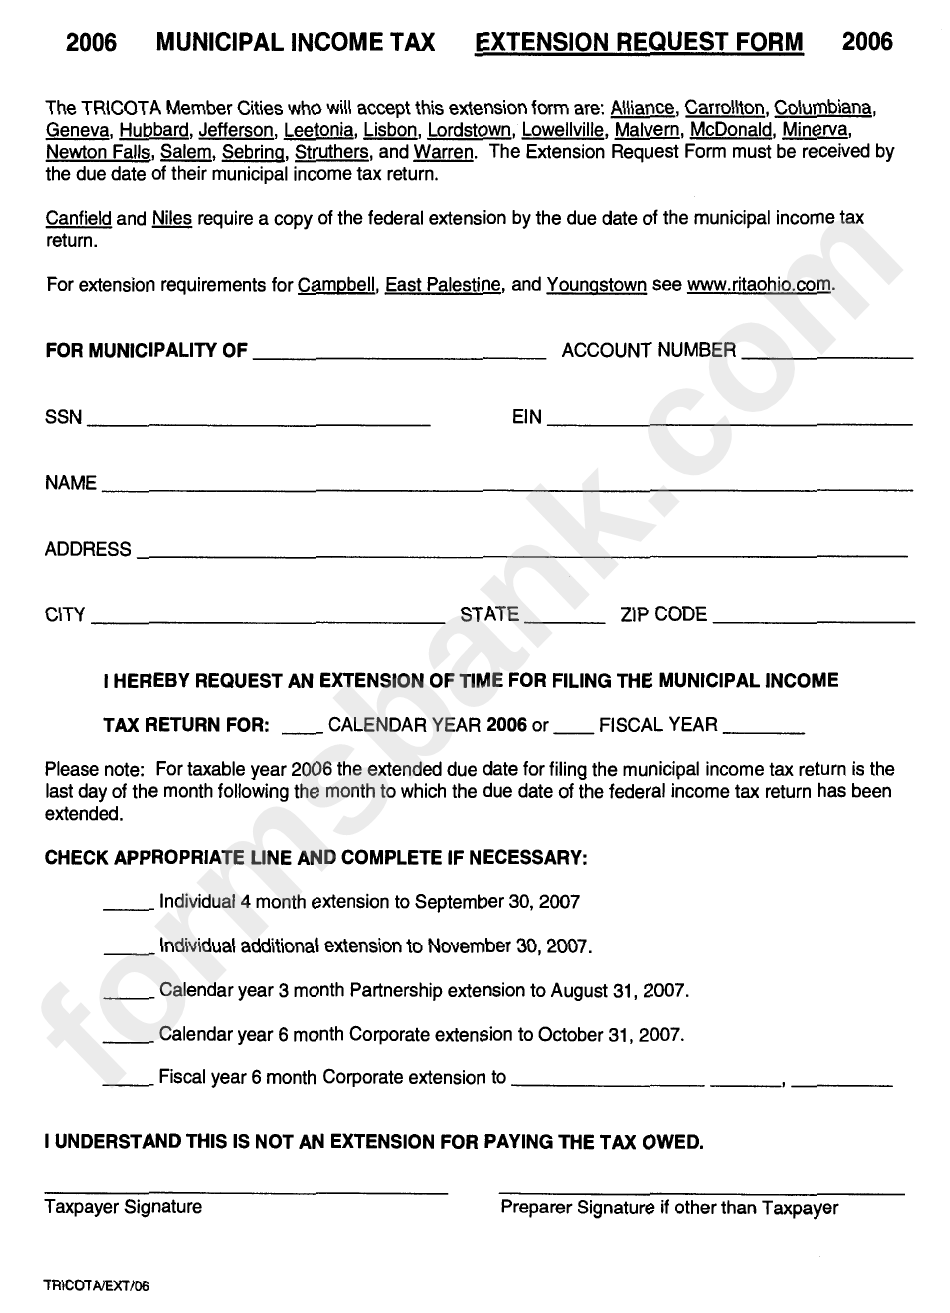 Extension Request Form - Tricota, Ohio Municipal Income Tax - 2006